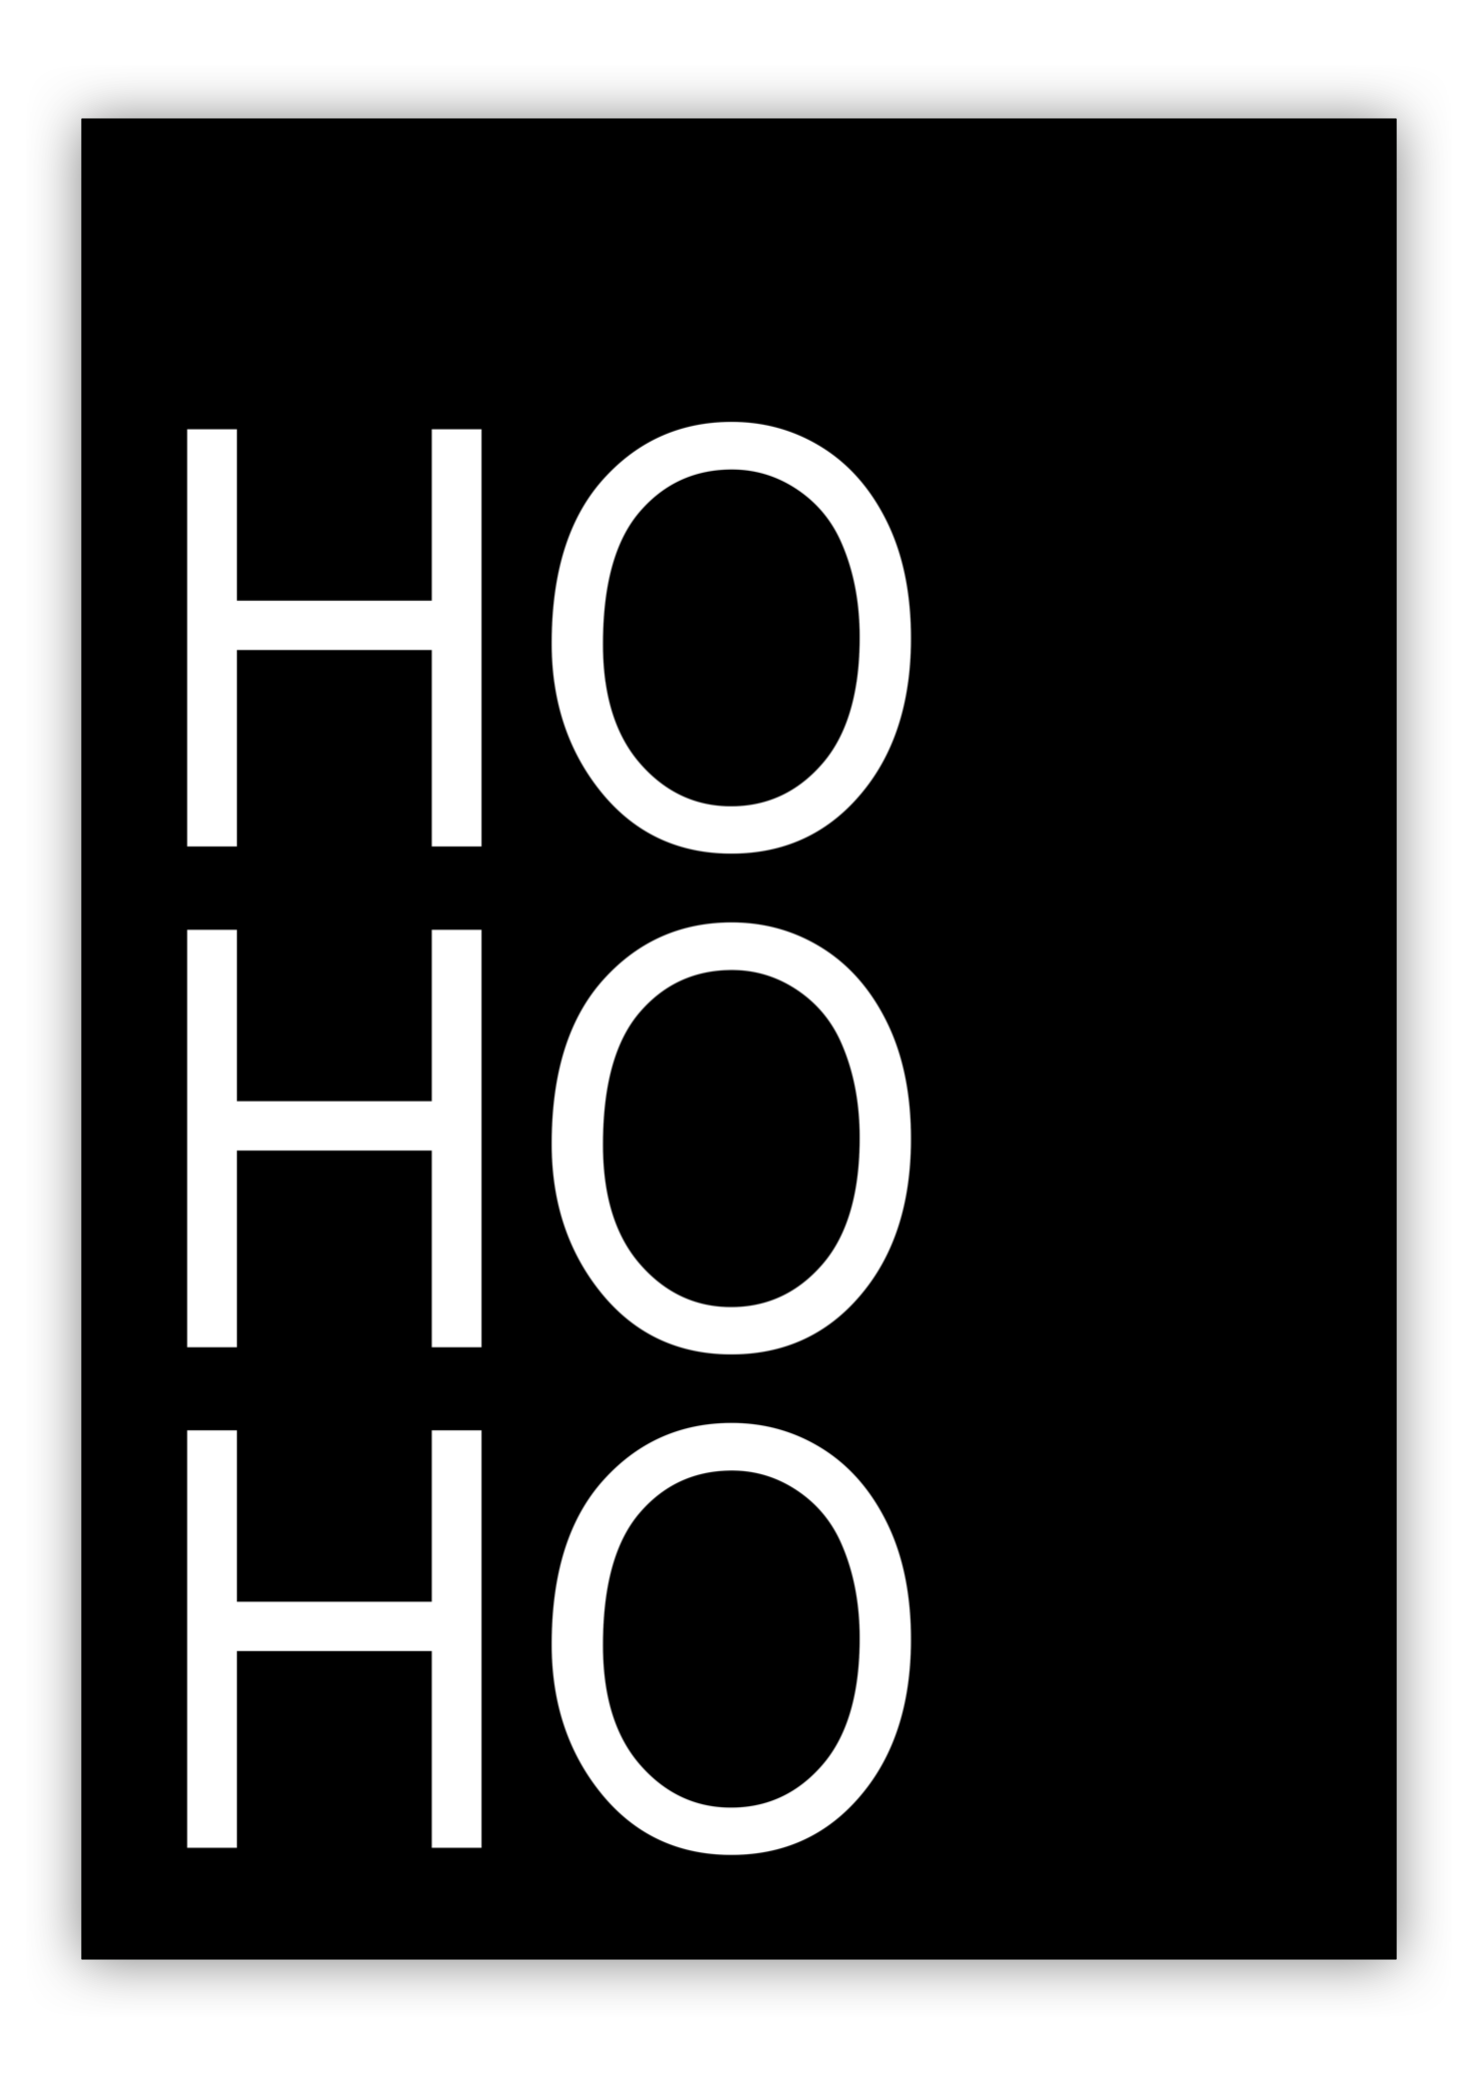 huisjevansanne kerstposter zwart wit met tekst ho ho ho